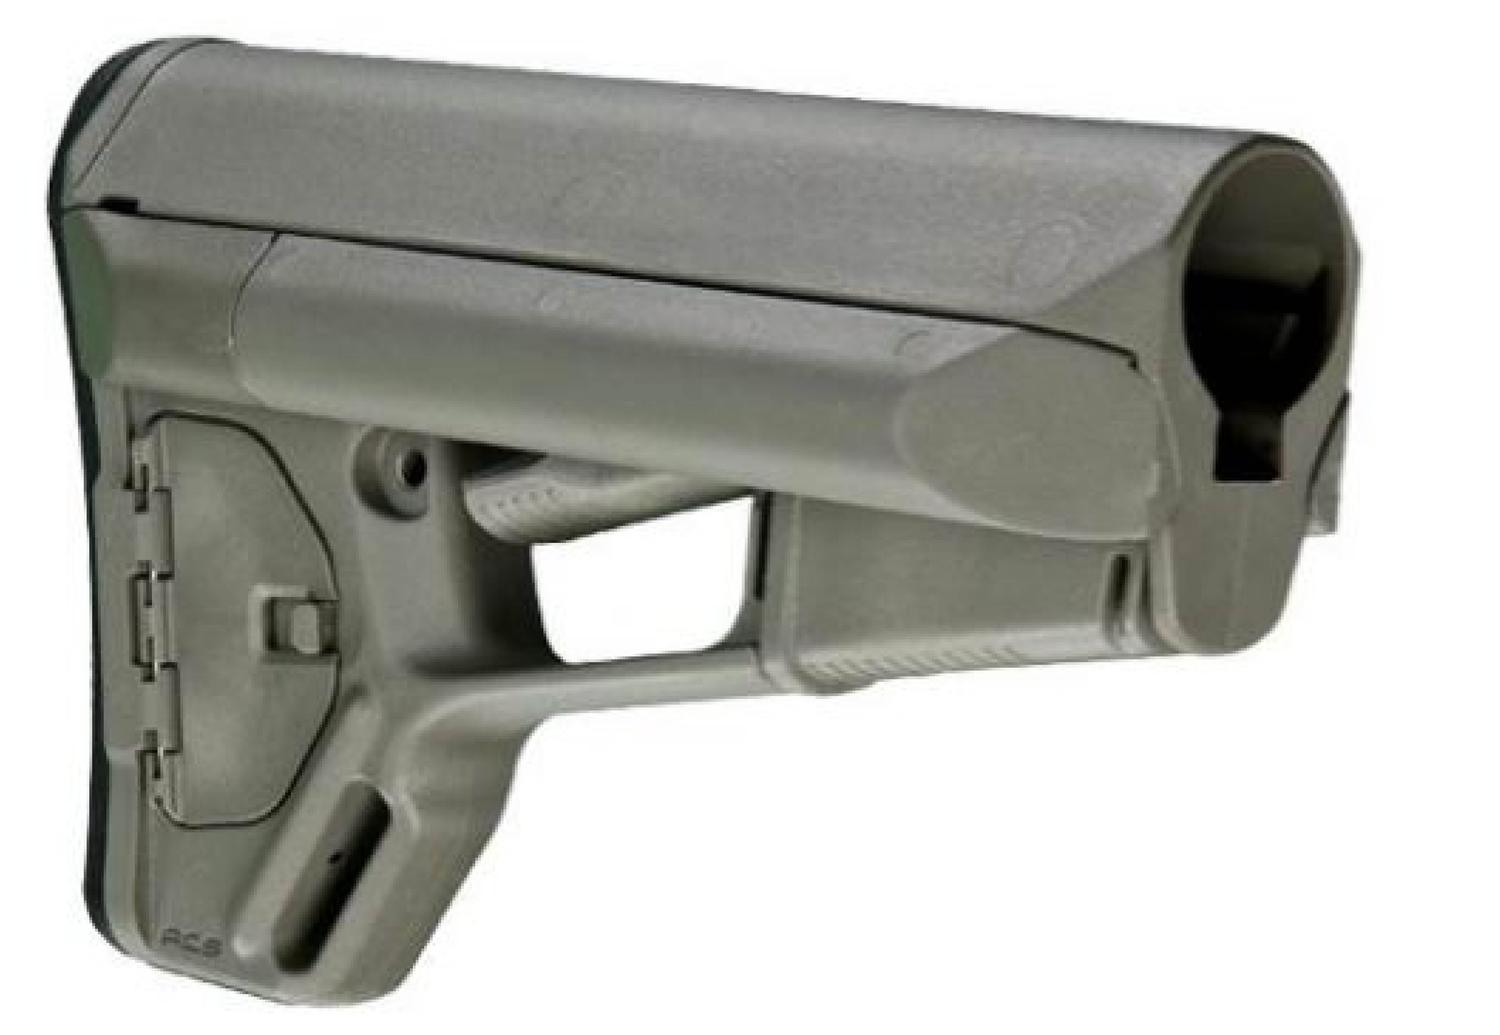  Magpul Acs Carbine Stock Comm- Spec- Fol